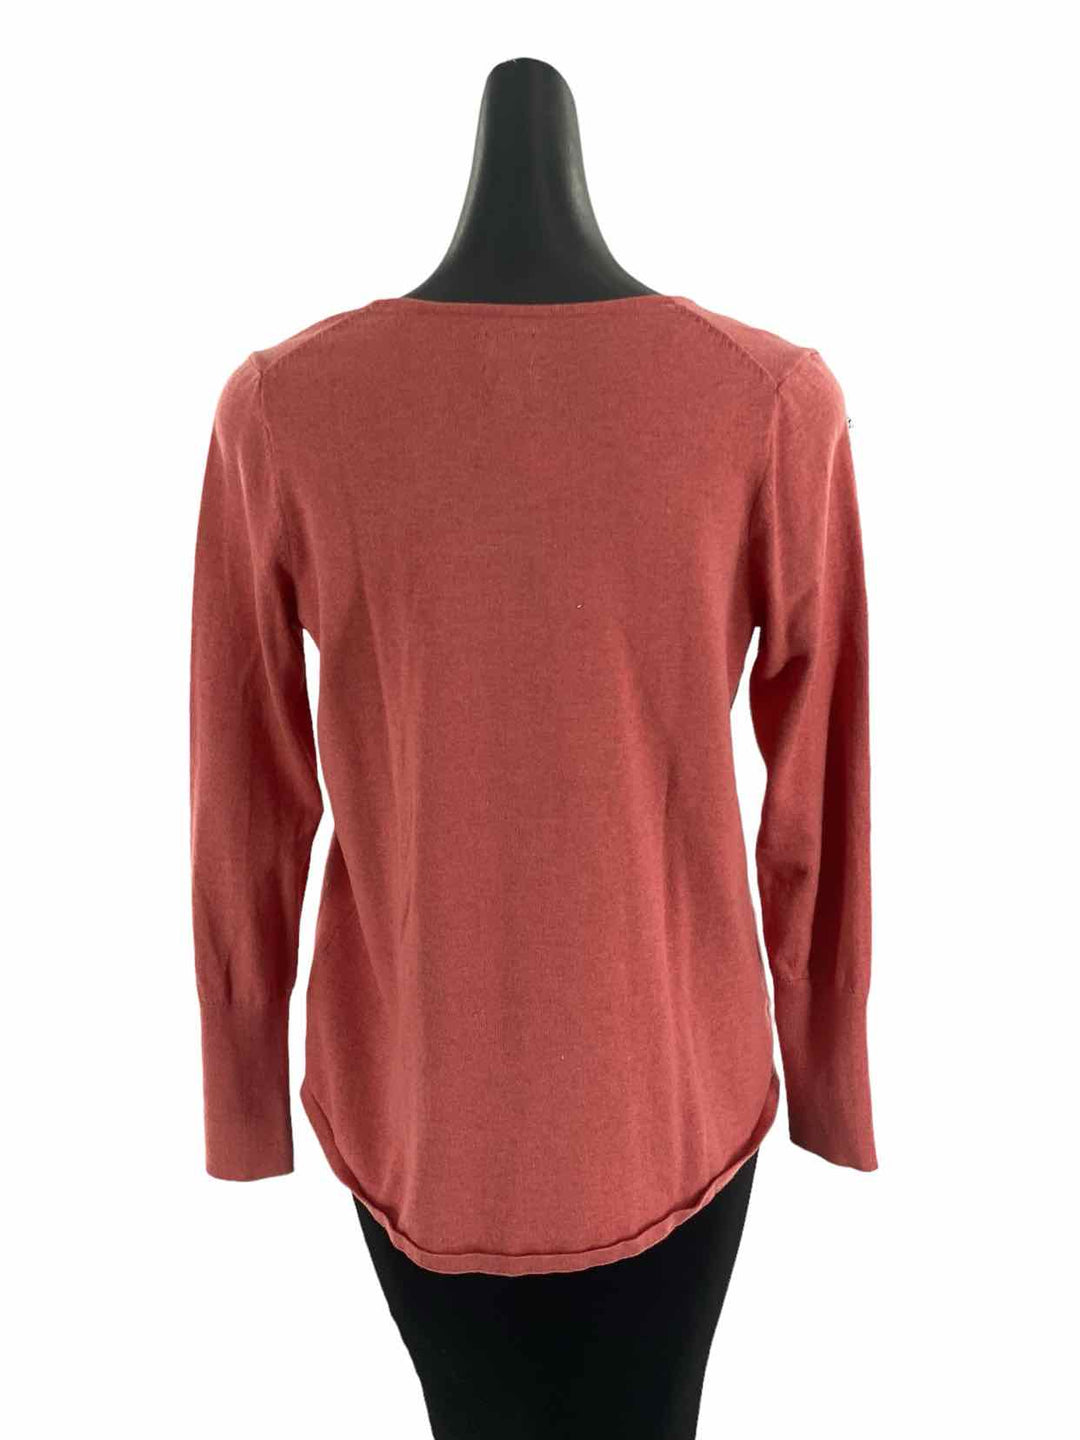 Nic + Zoe Size M Coral Long Sleeve Shirts